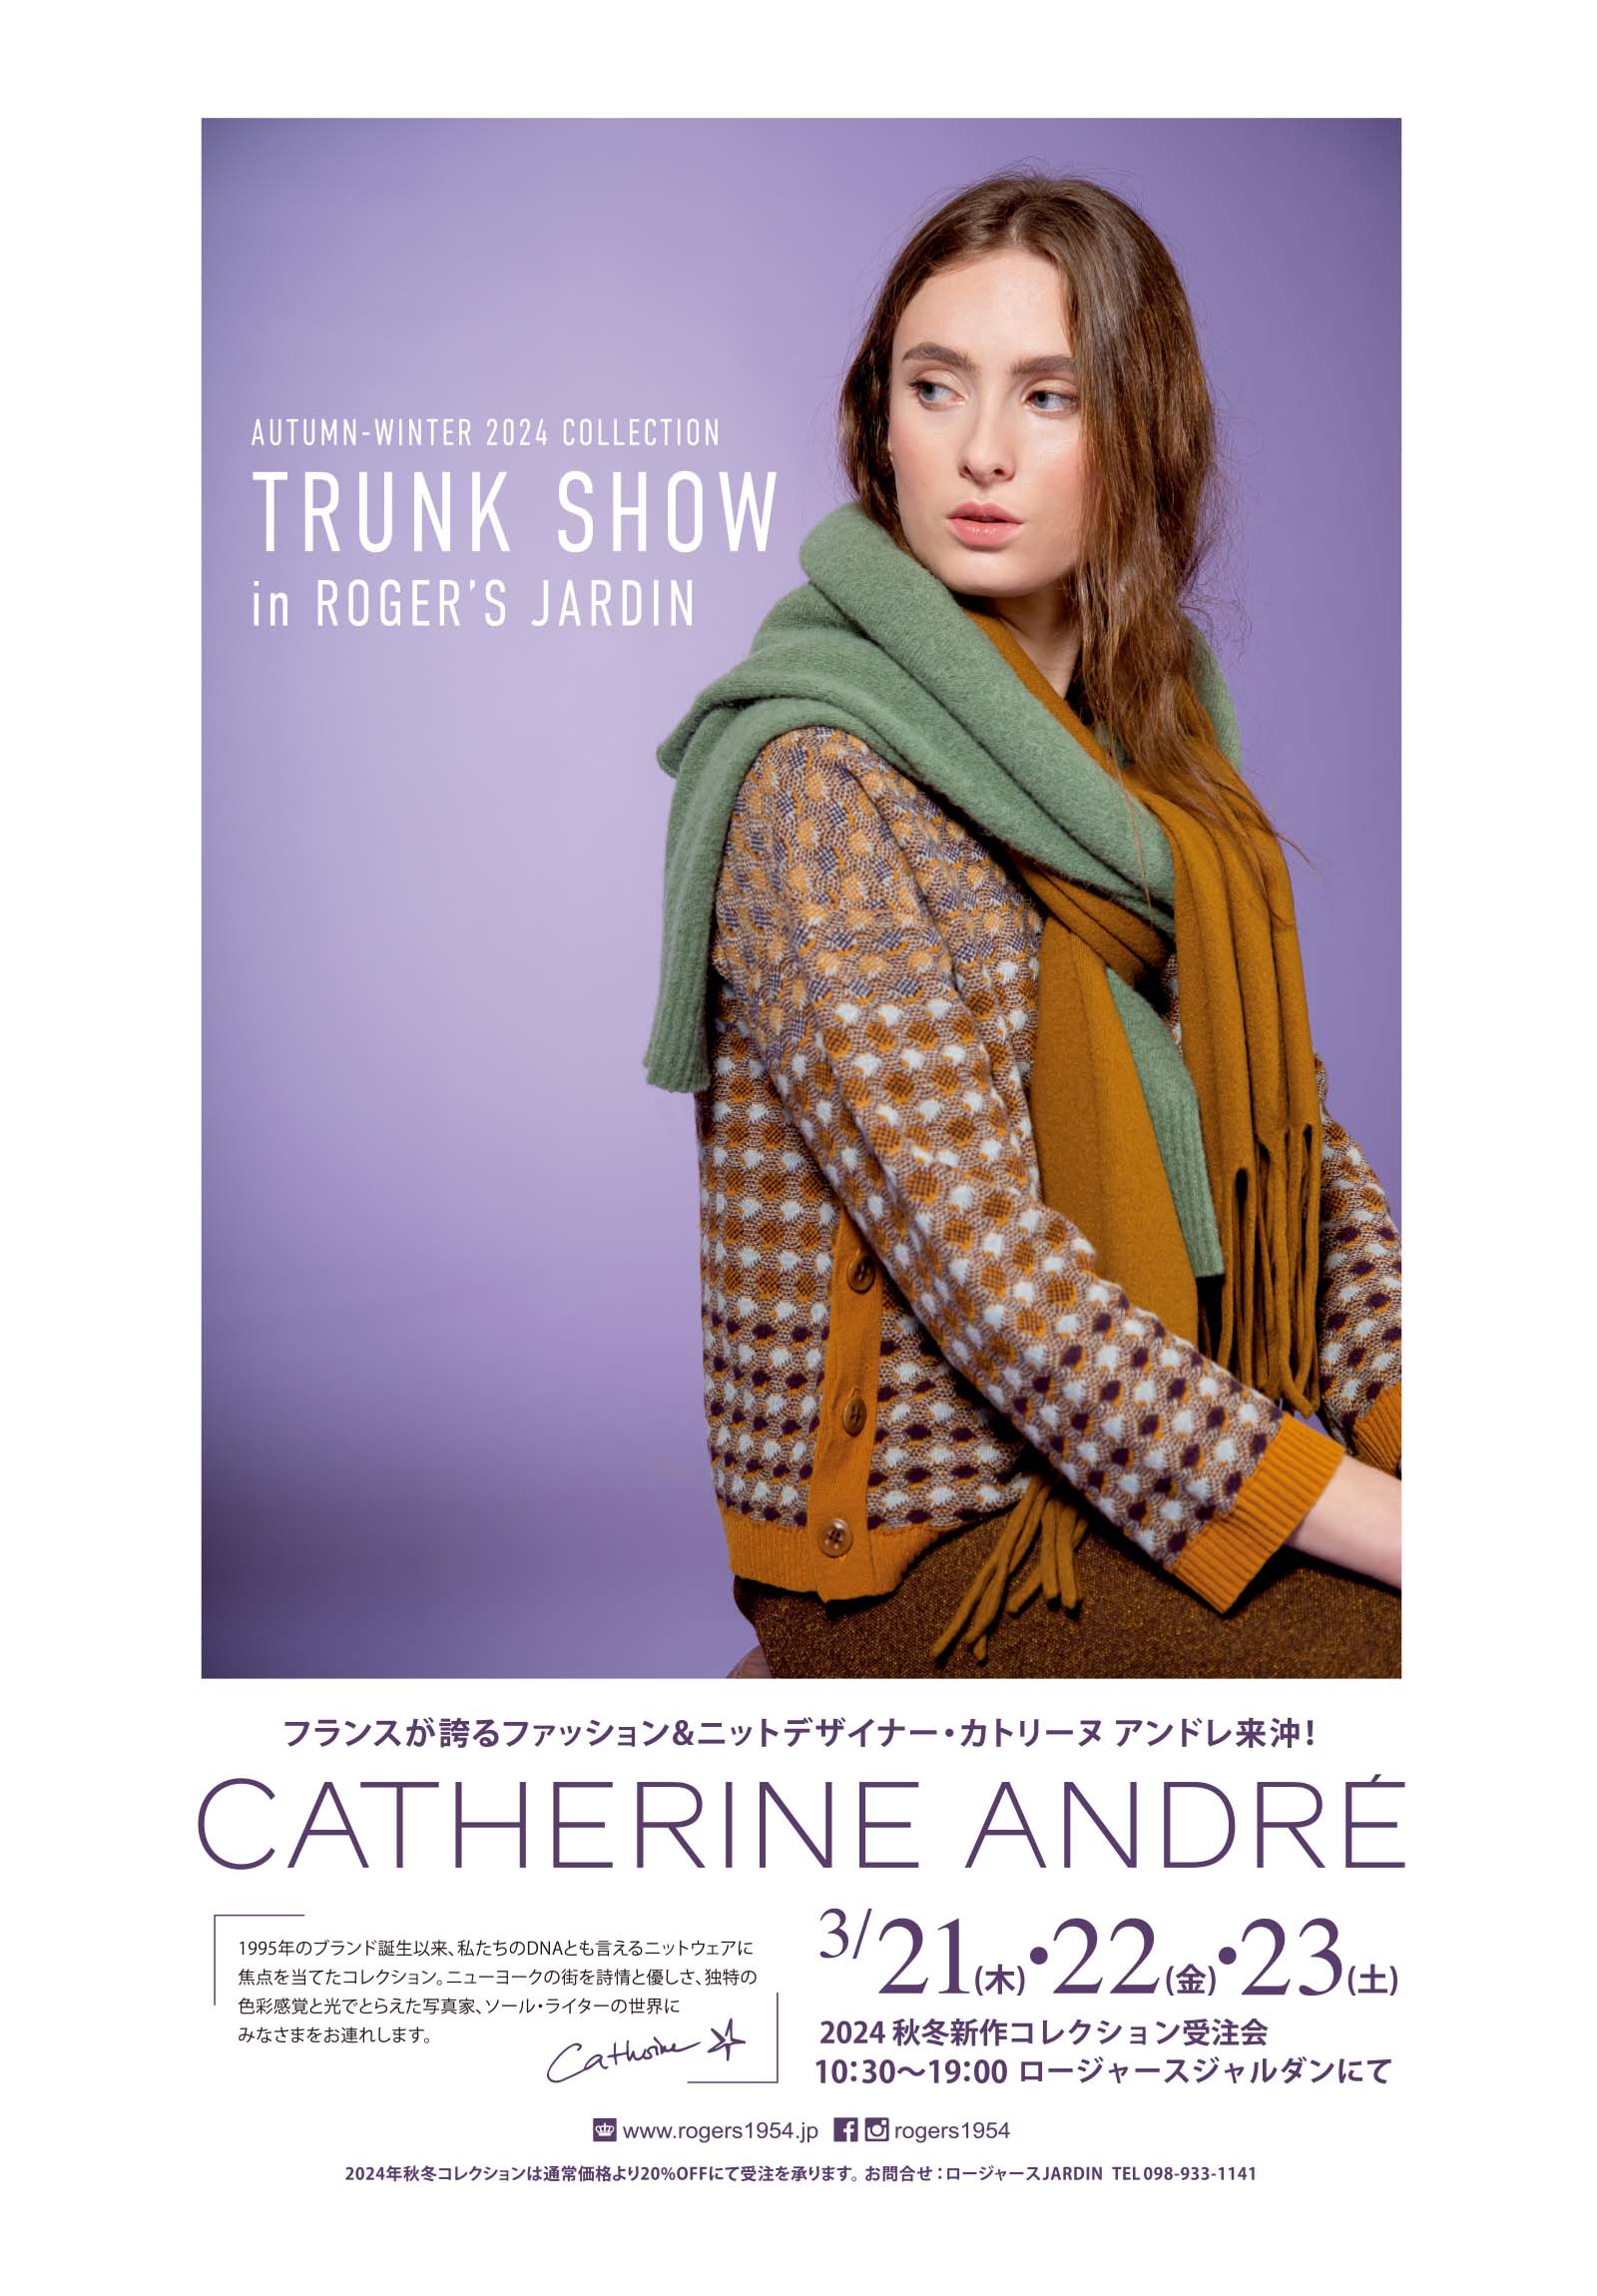 CATHERINE ANDRÉ TRUNK SHOW フランスが誇るファッション&ニットデザイナー カトリーヌアンドレ来沖!